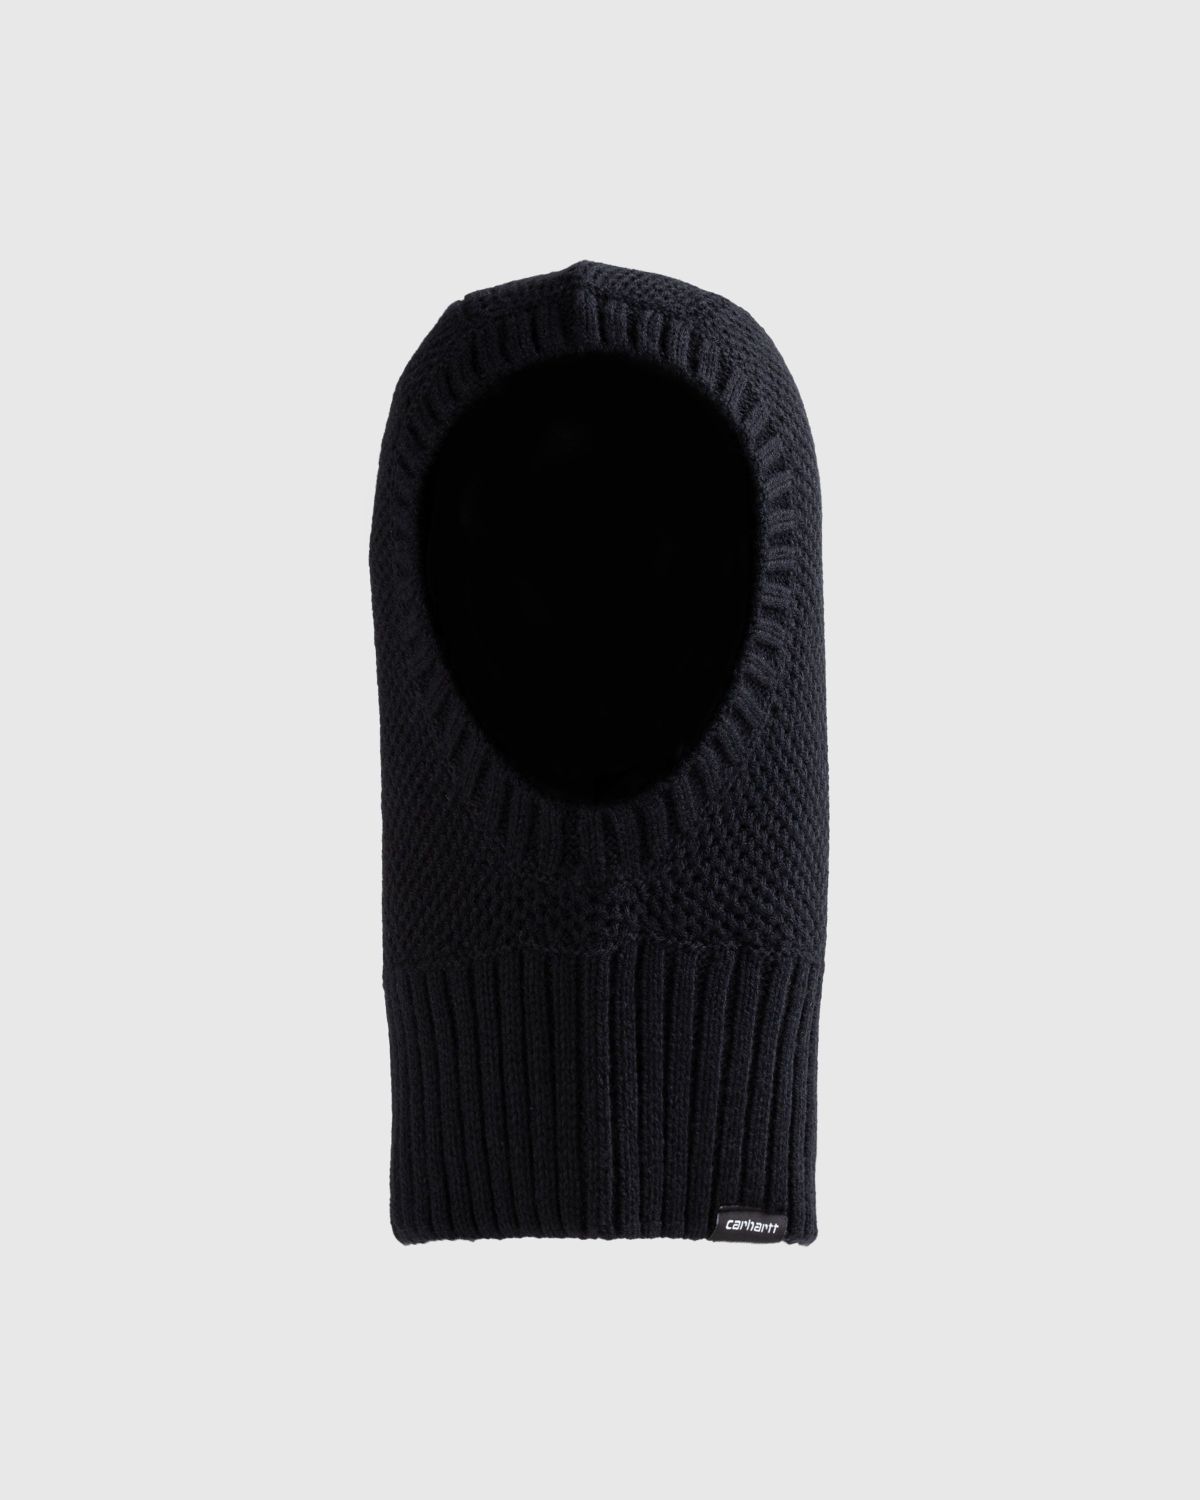 Carhartt WIP – Remi Hood Black - Hats - Black - Image 1